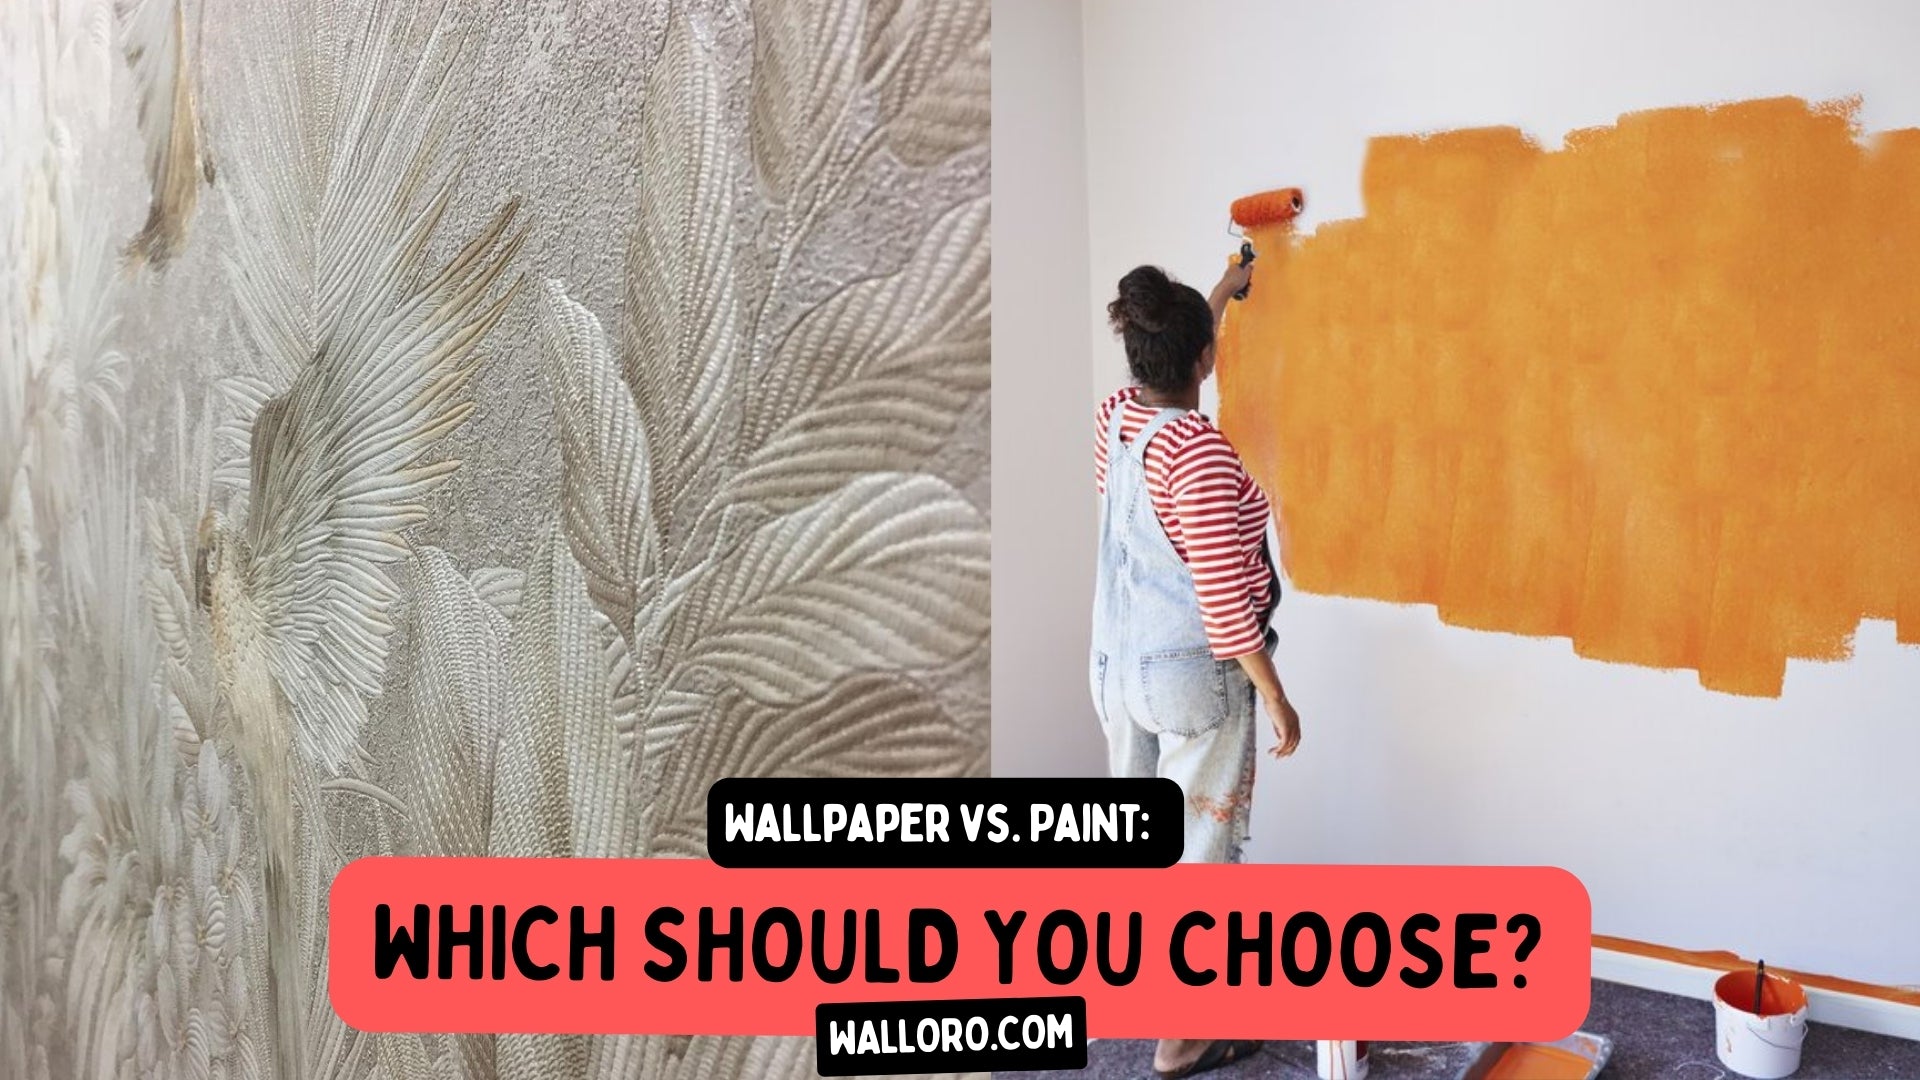 Wallpaper vs. Paint: Which Should You Choose?